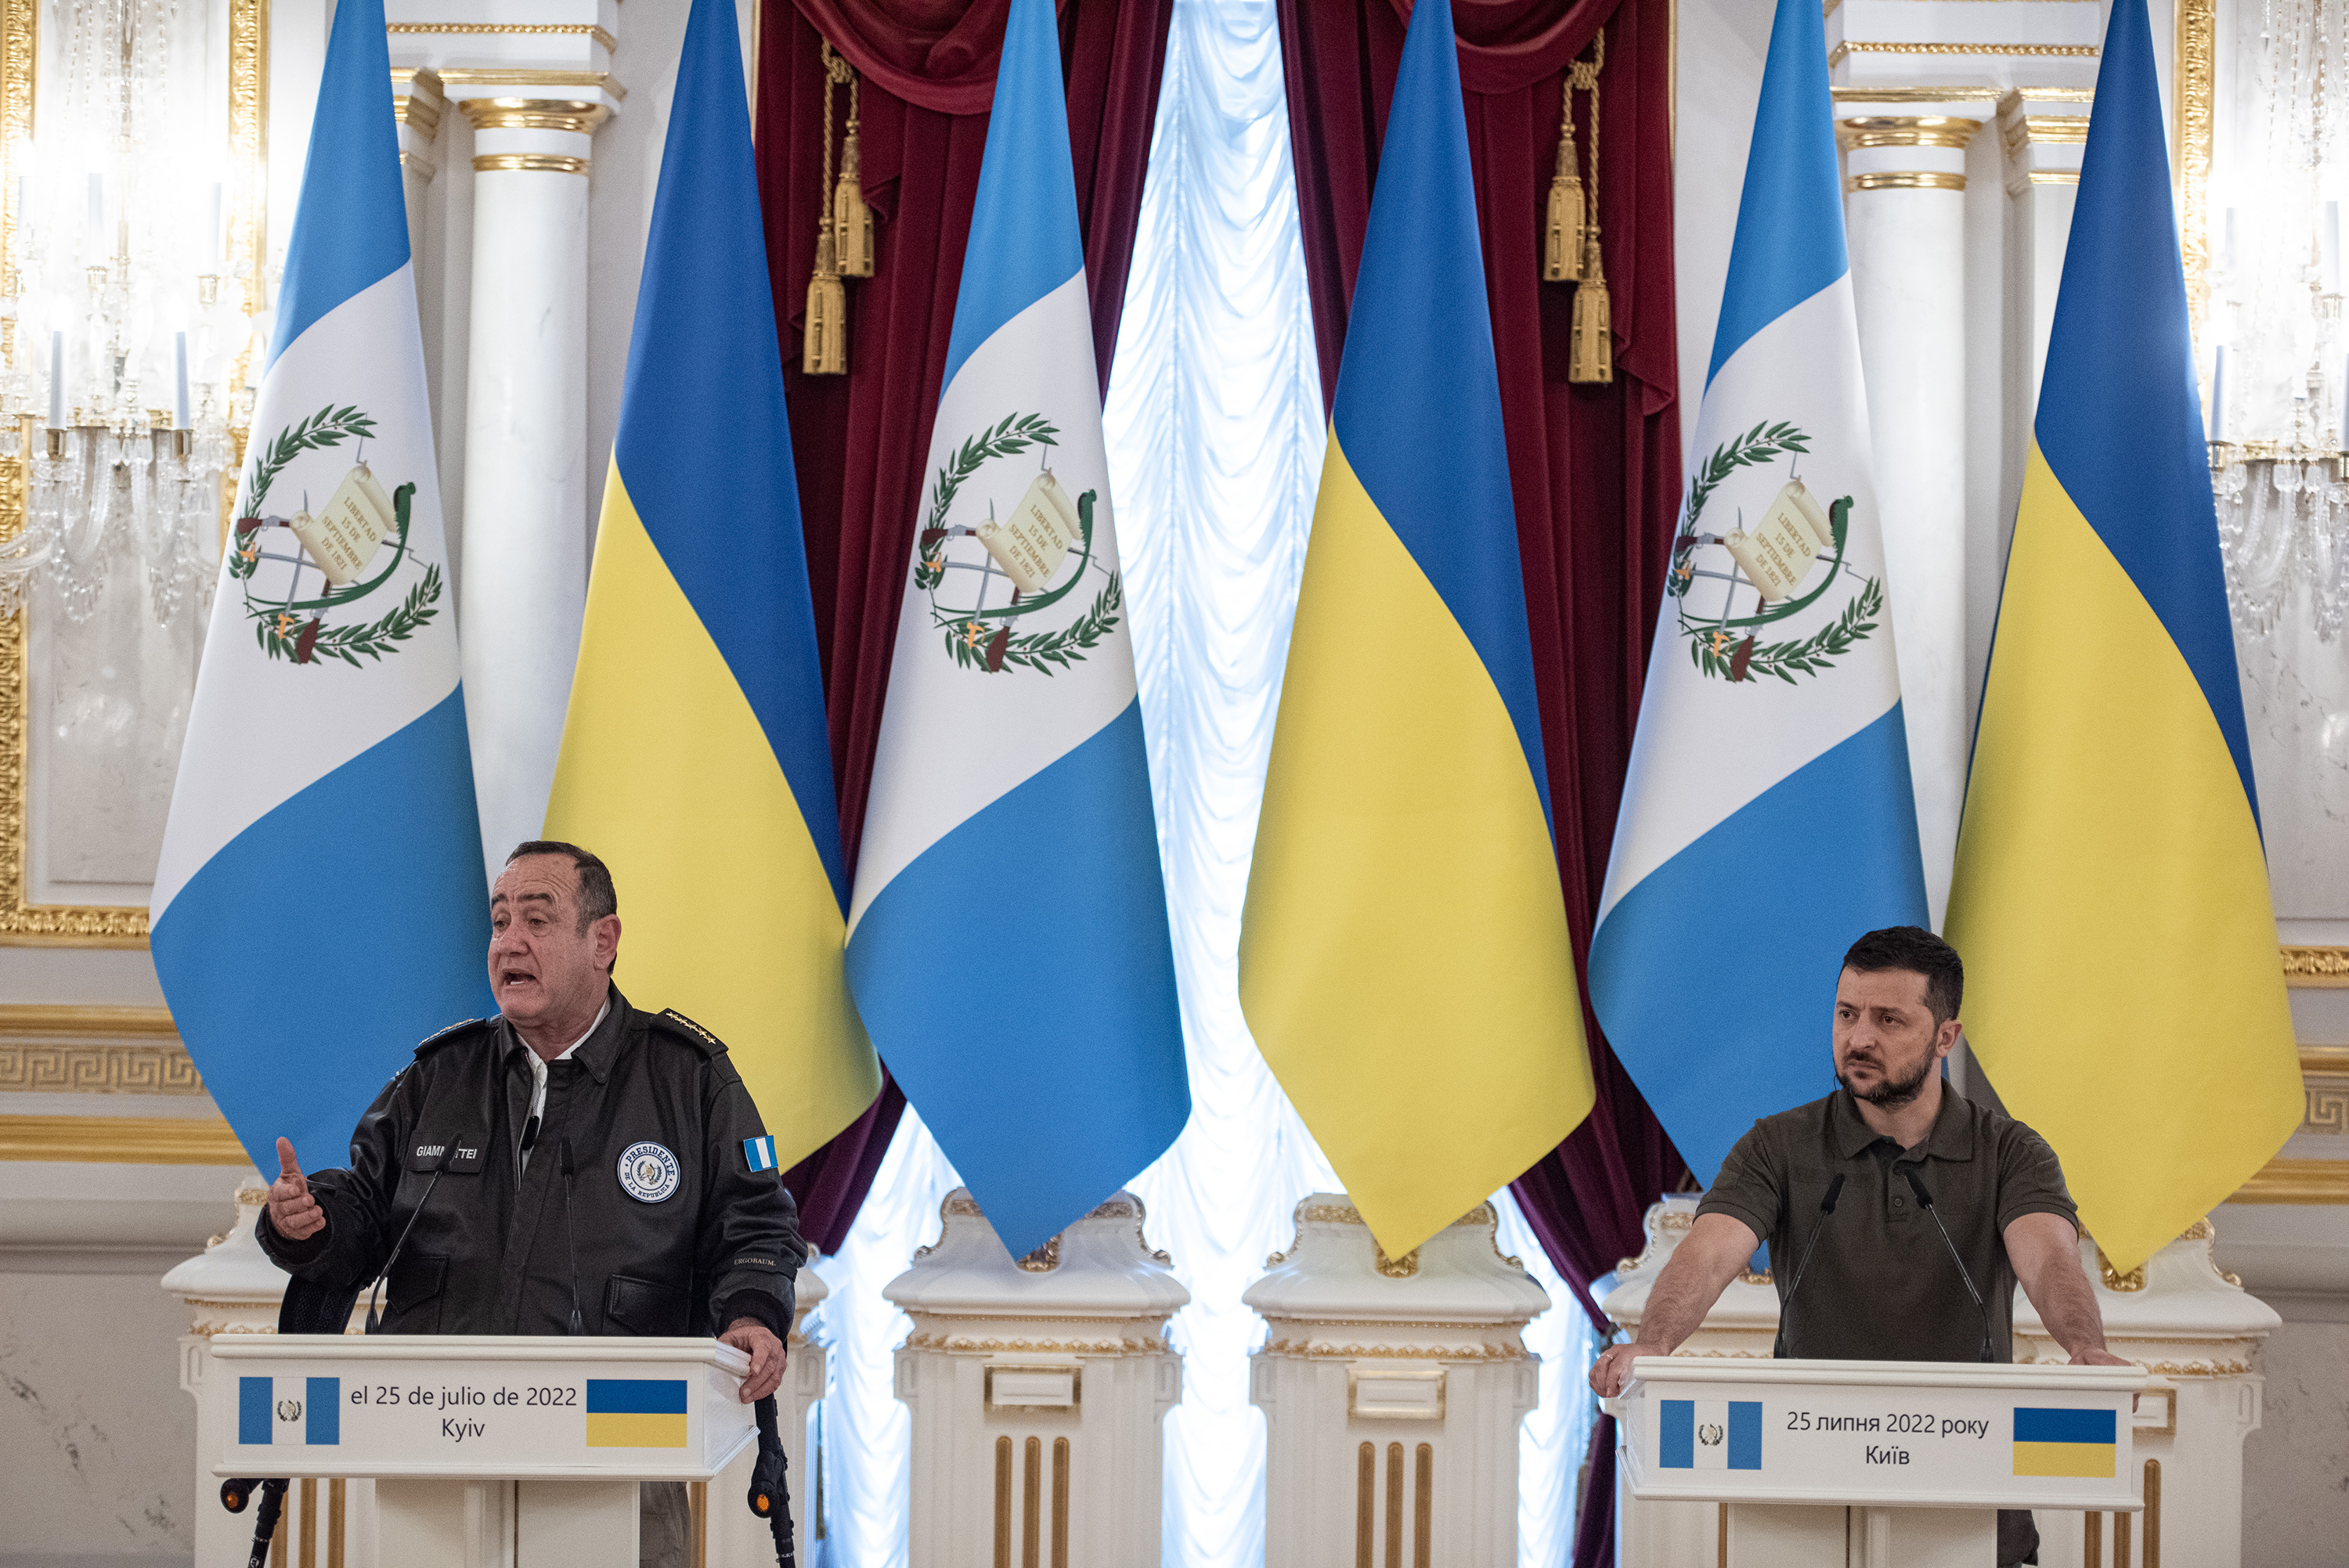 Ukrainian president Volodymyr Zelensky and President of Guatemala Alejandro Giammattei hold a joint press conference on July 25 in Kyiv, Ukraine.